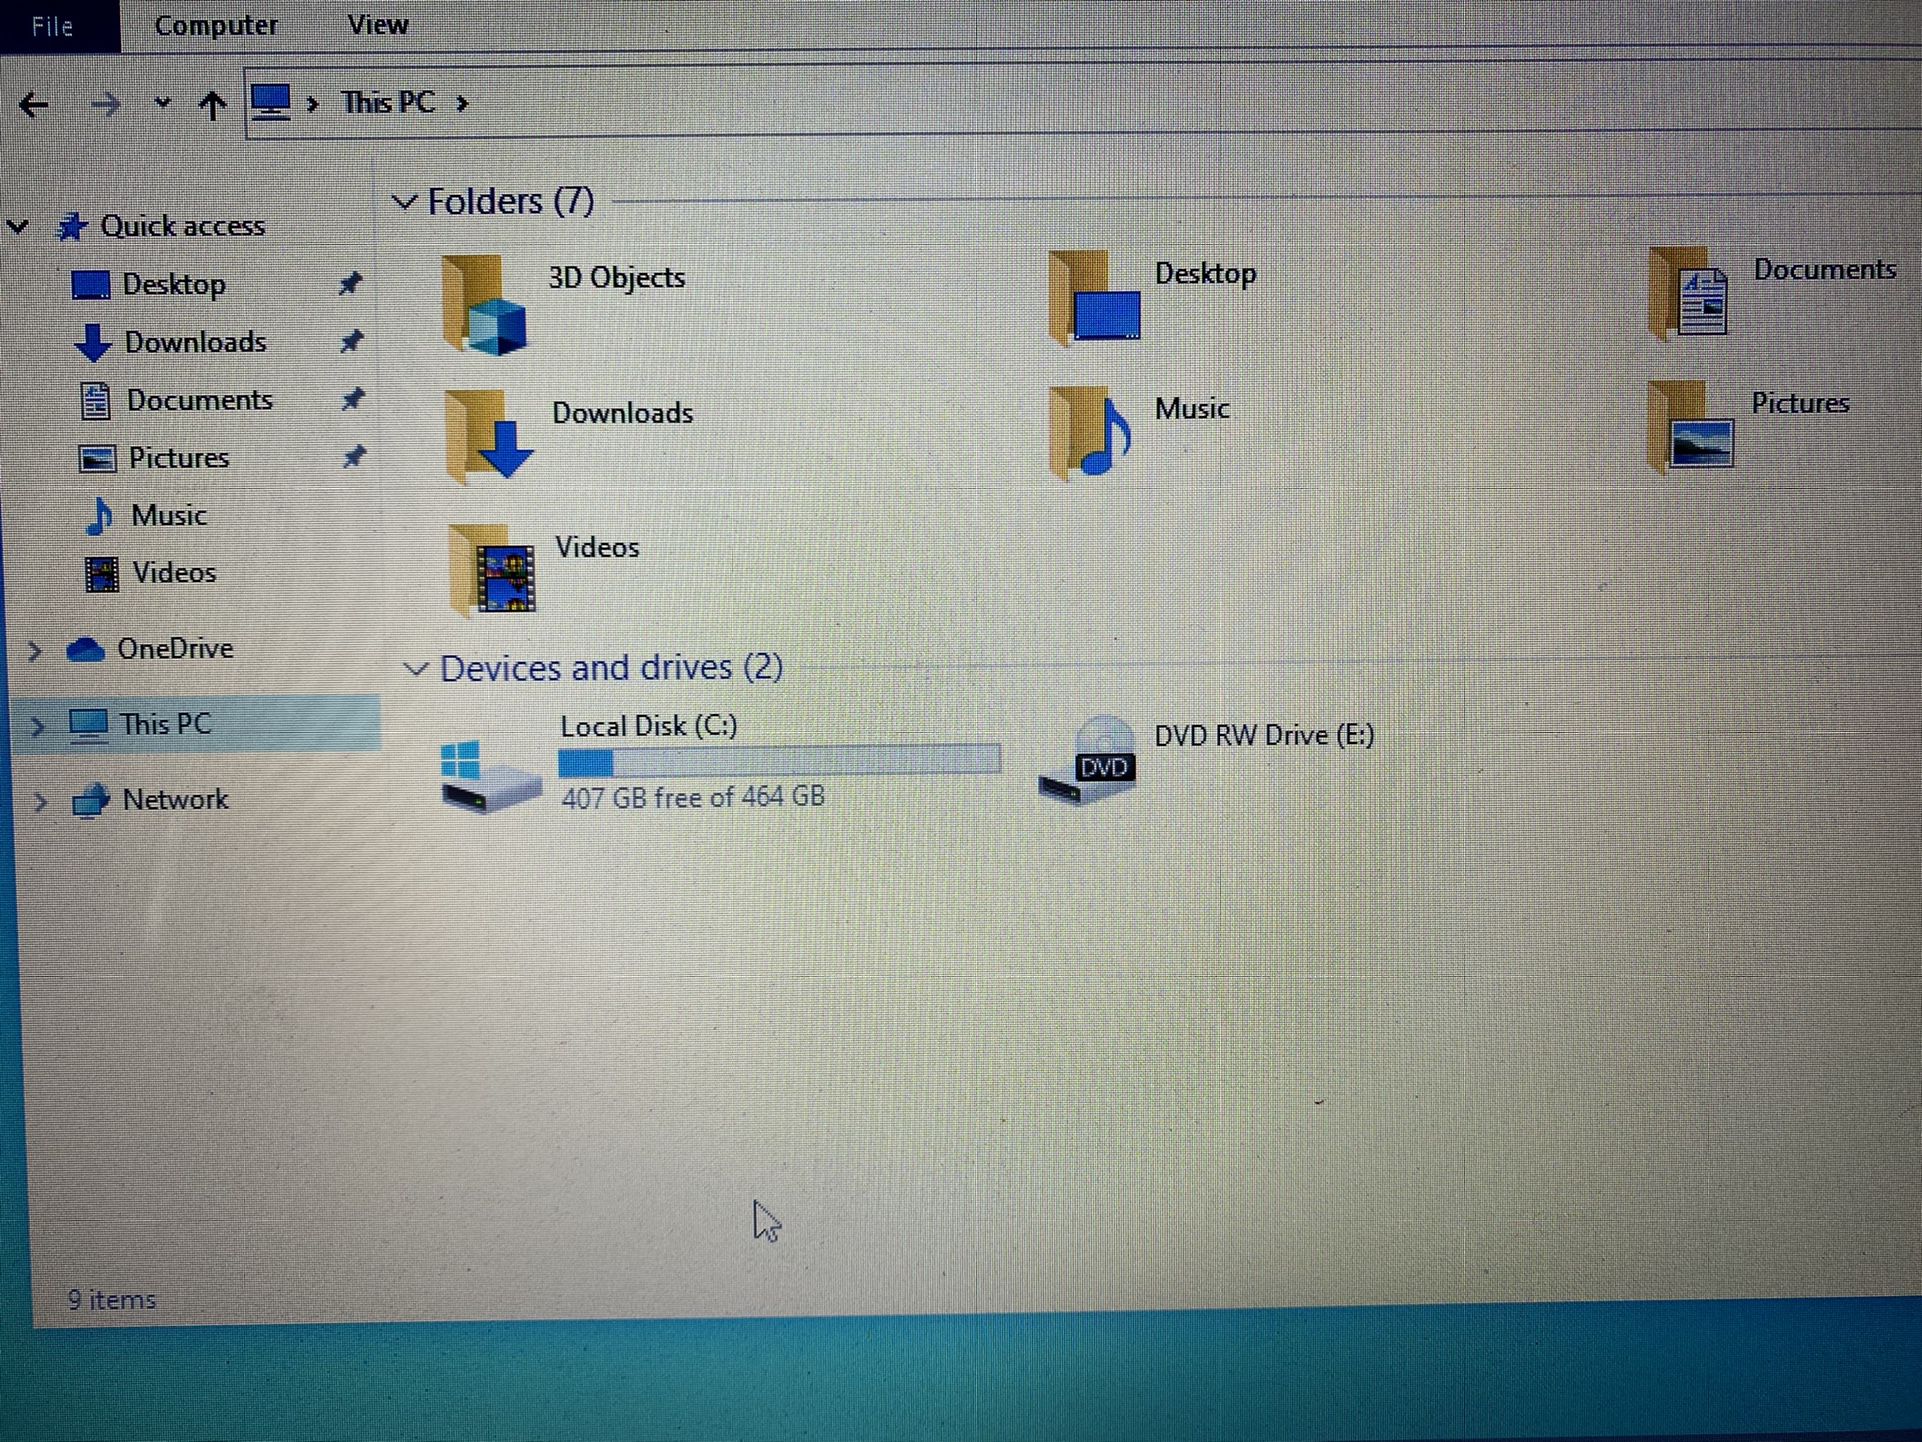 Dell Inspiron 15 Windows 10 Brand New Battery Refurbished 